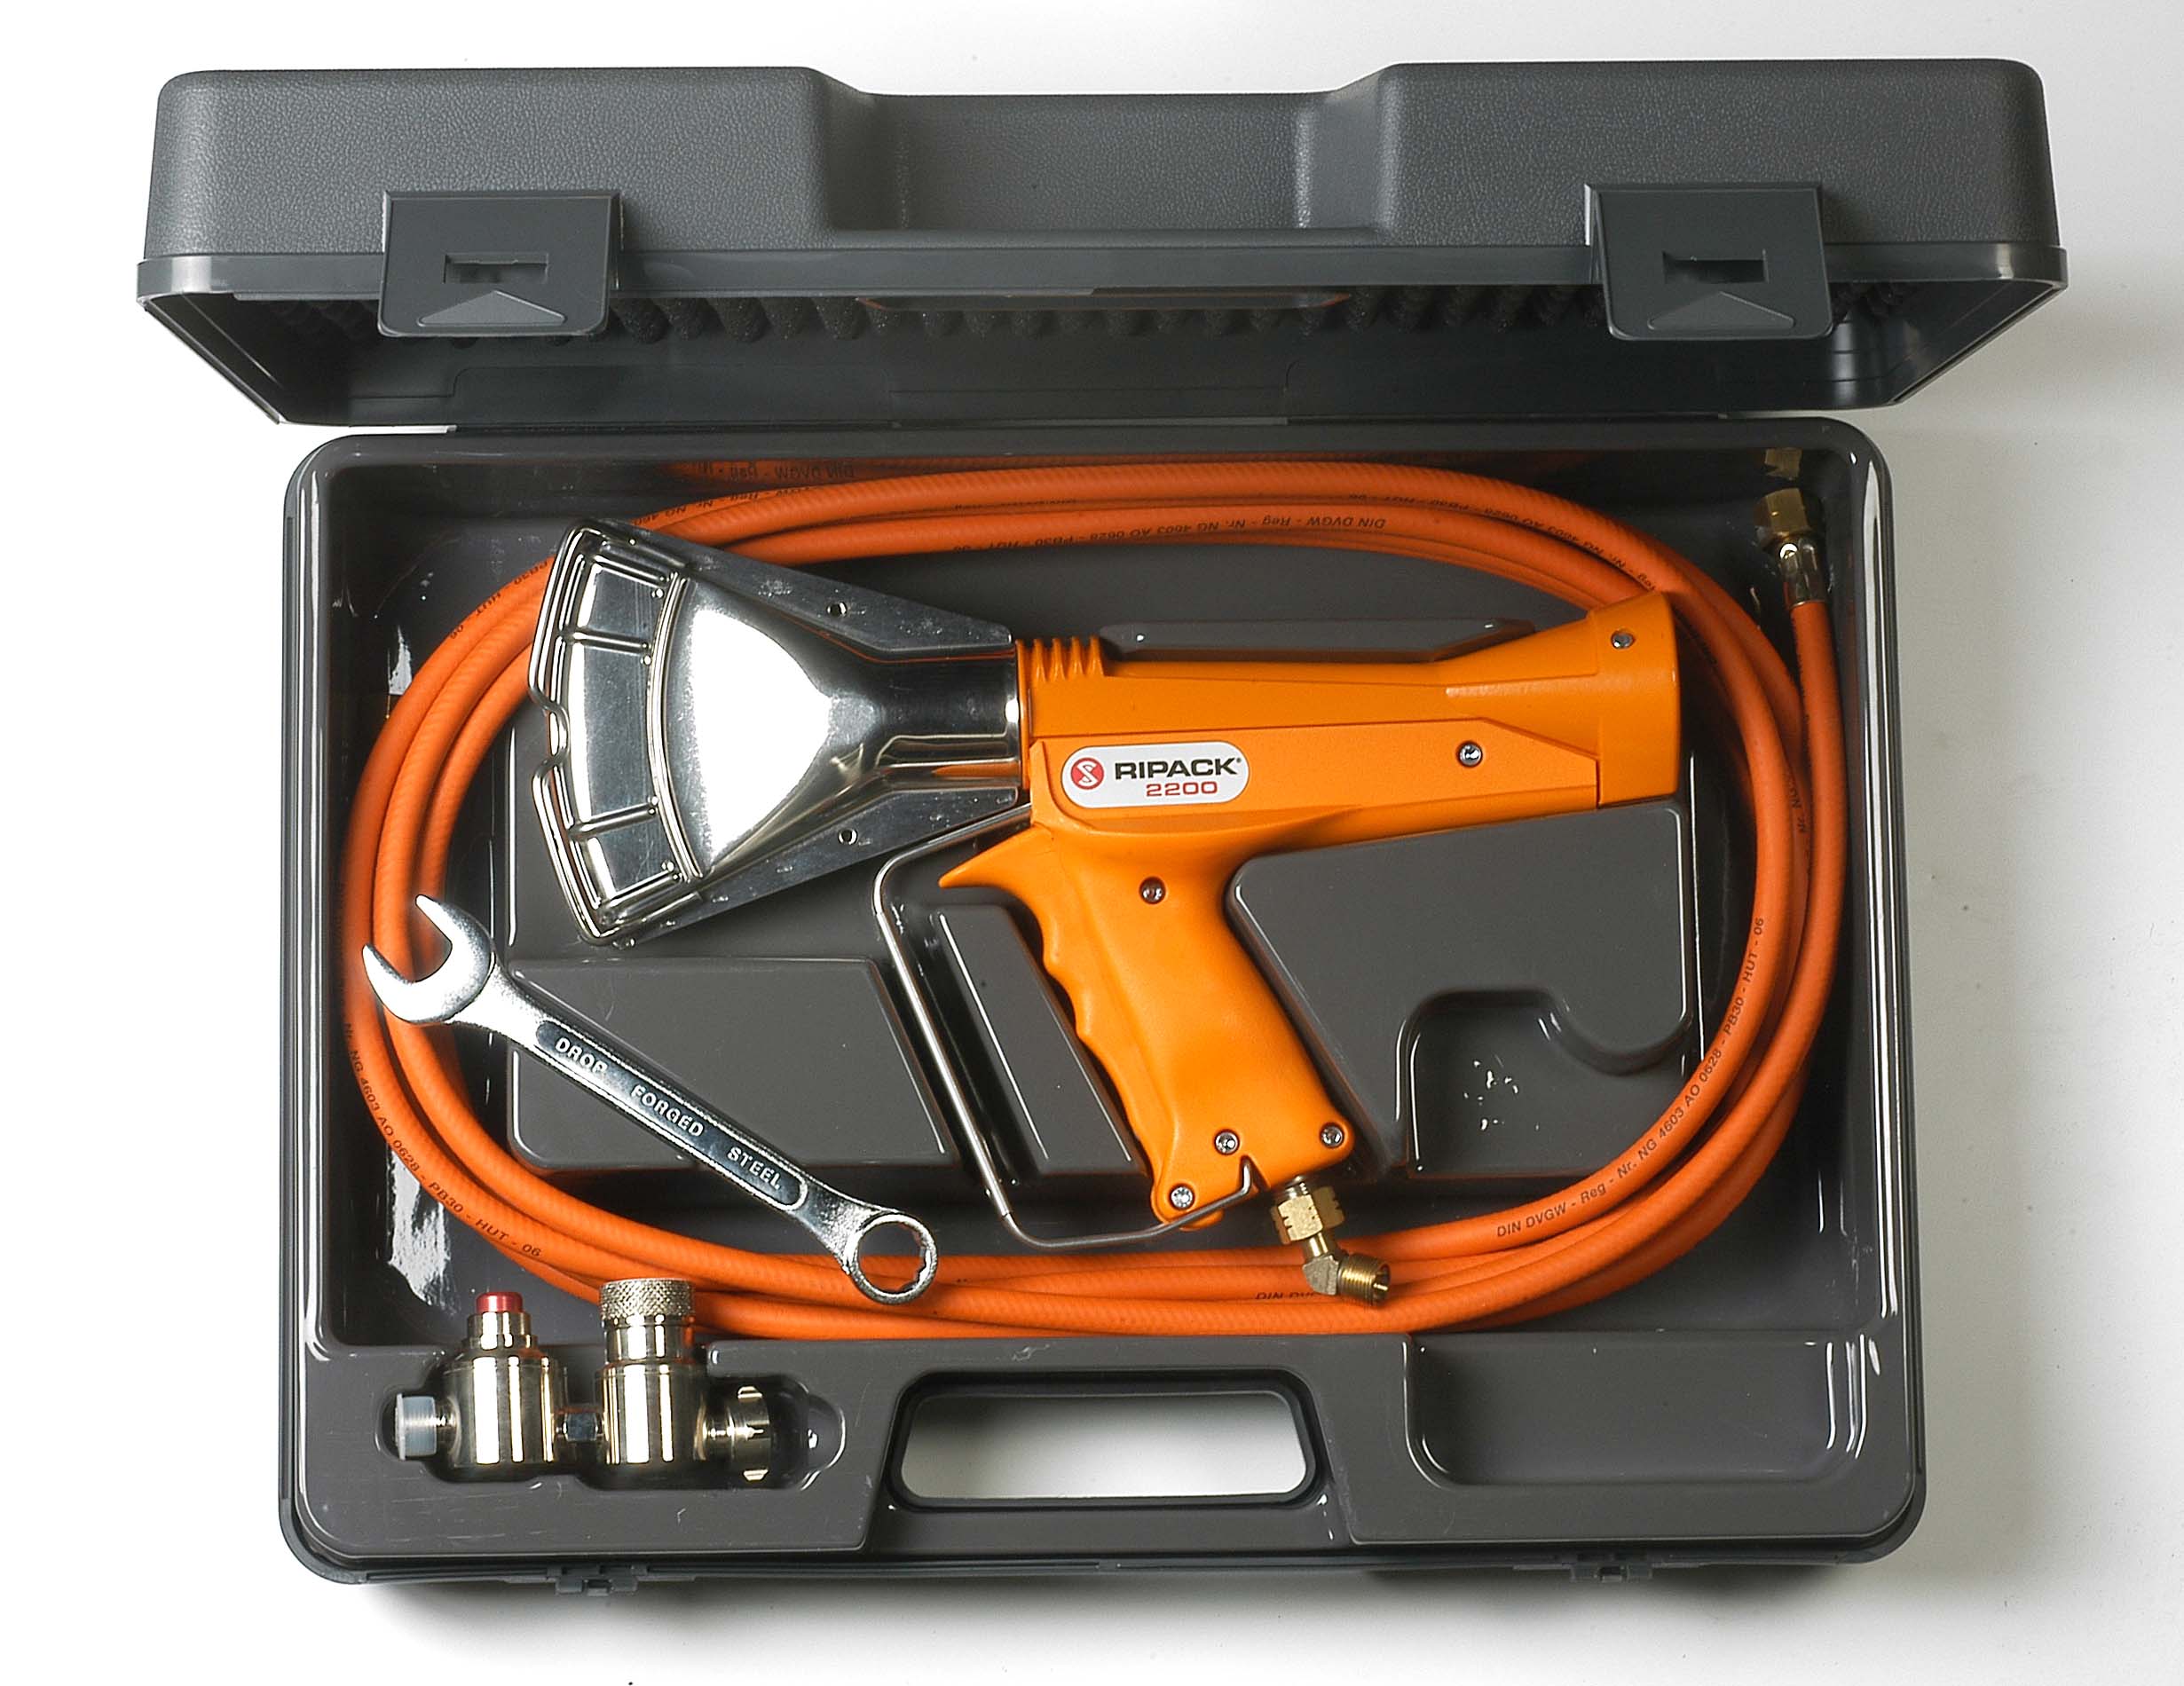 Ripack Series 3000 Heat Gun, Shrink Wrap Heat Gun Supplier